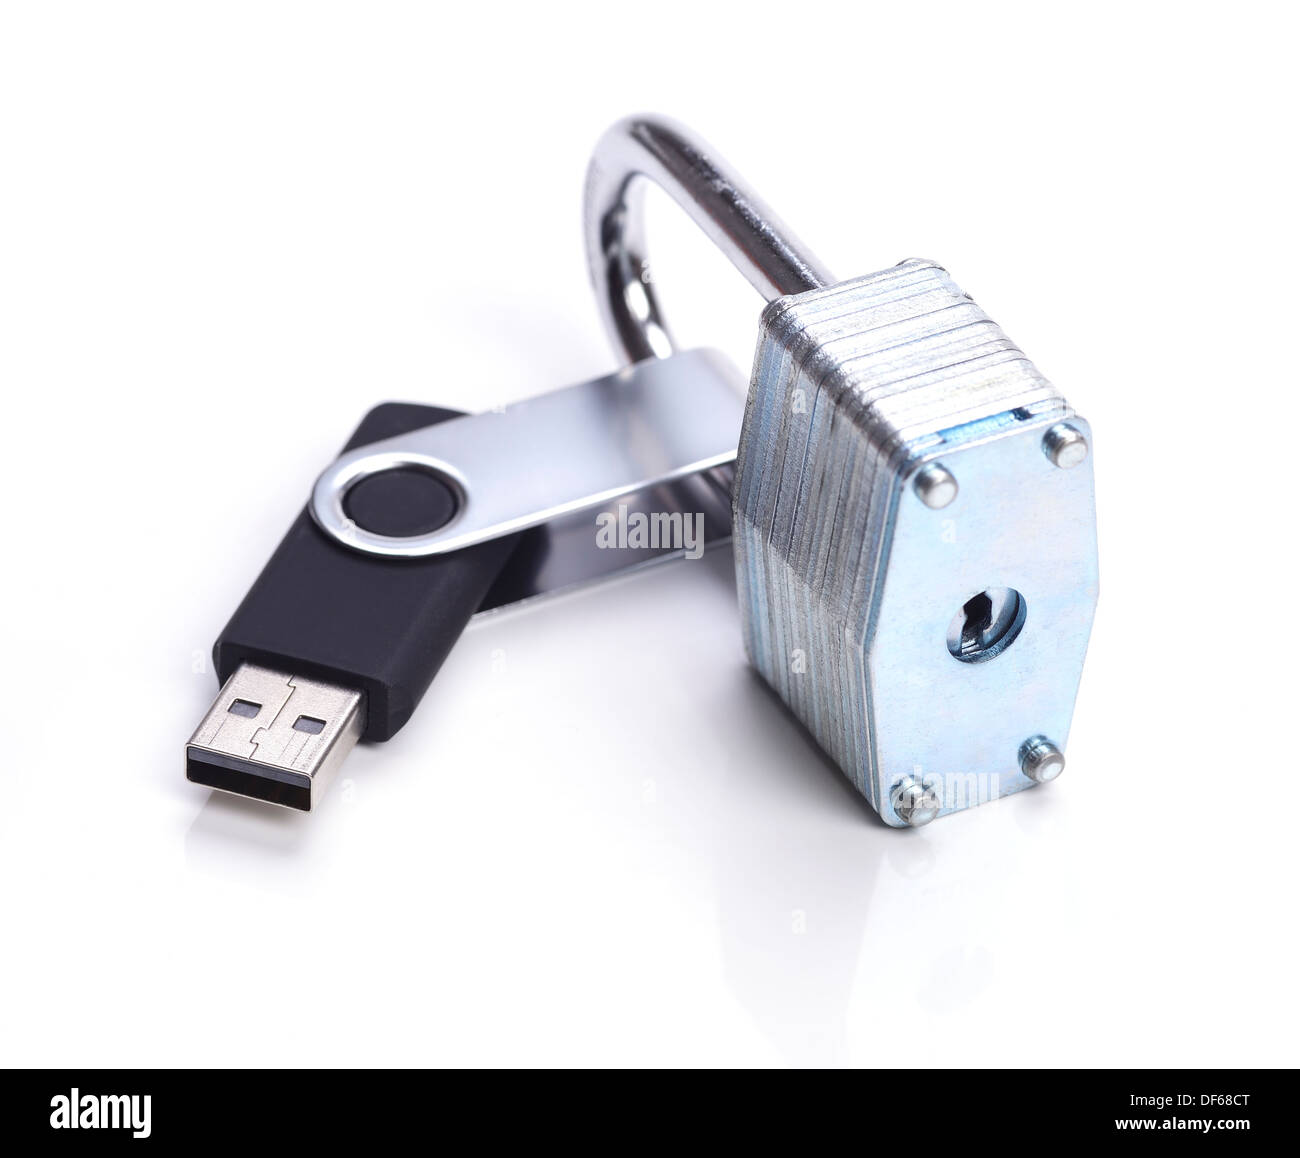 USB memory stick inside a padlock Stock Photo